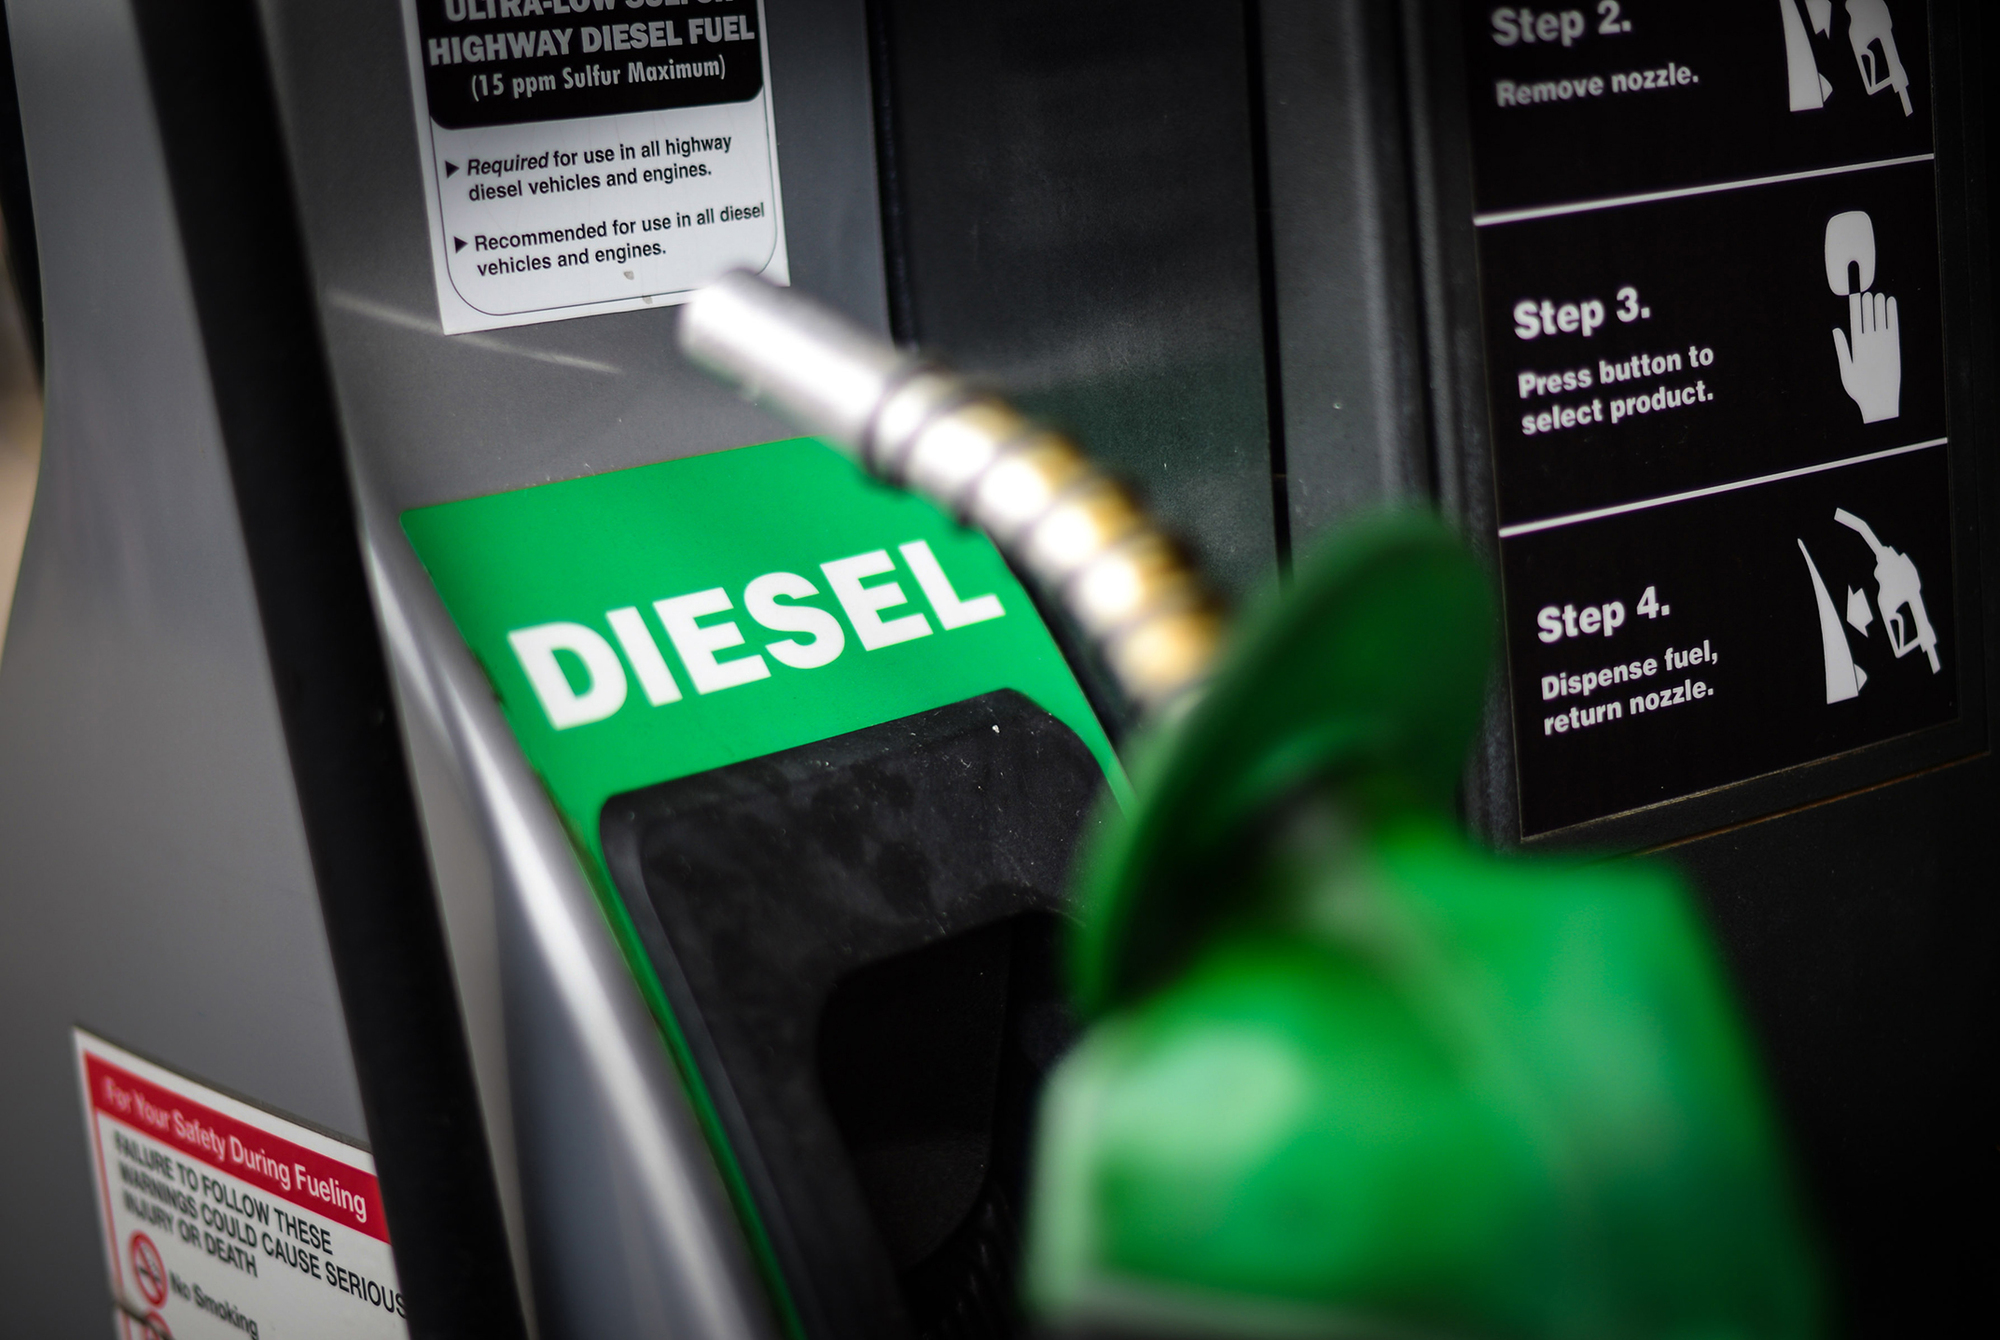 Distribution of Diesel resumes, petrol drops to 10% (VIDEO) - LNW Lanka  News Web